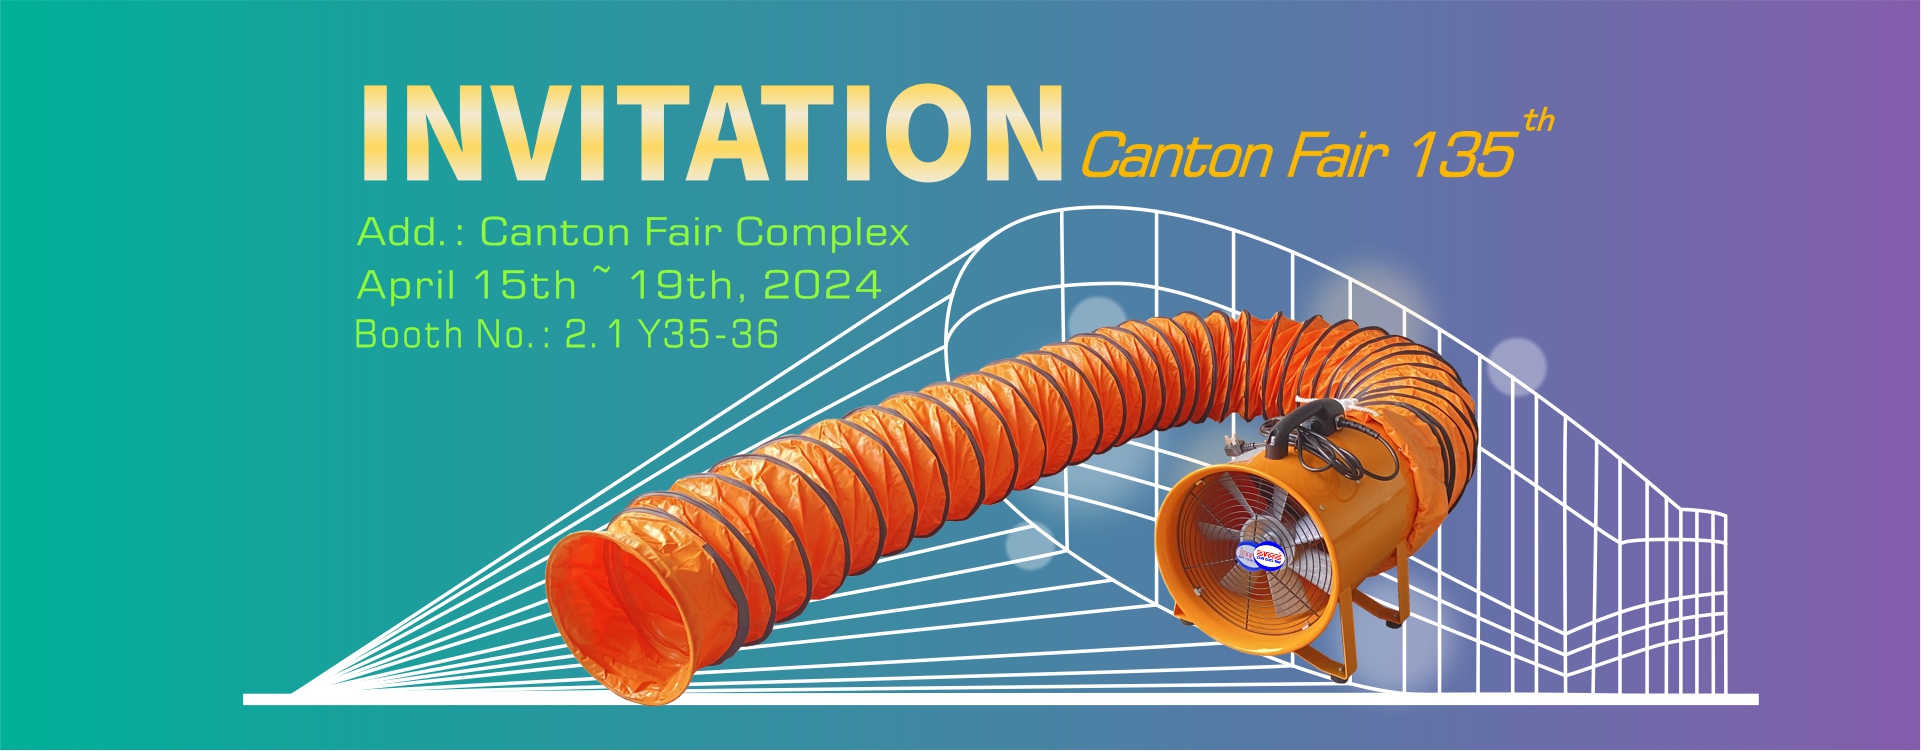 Invitation to The 155th Canton Fair